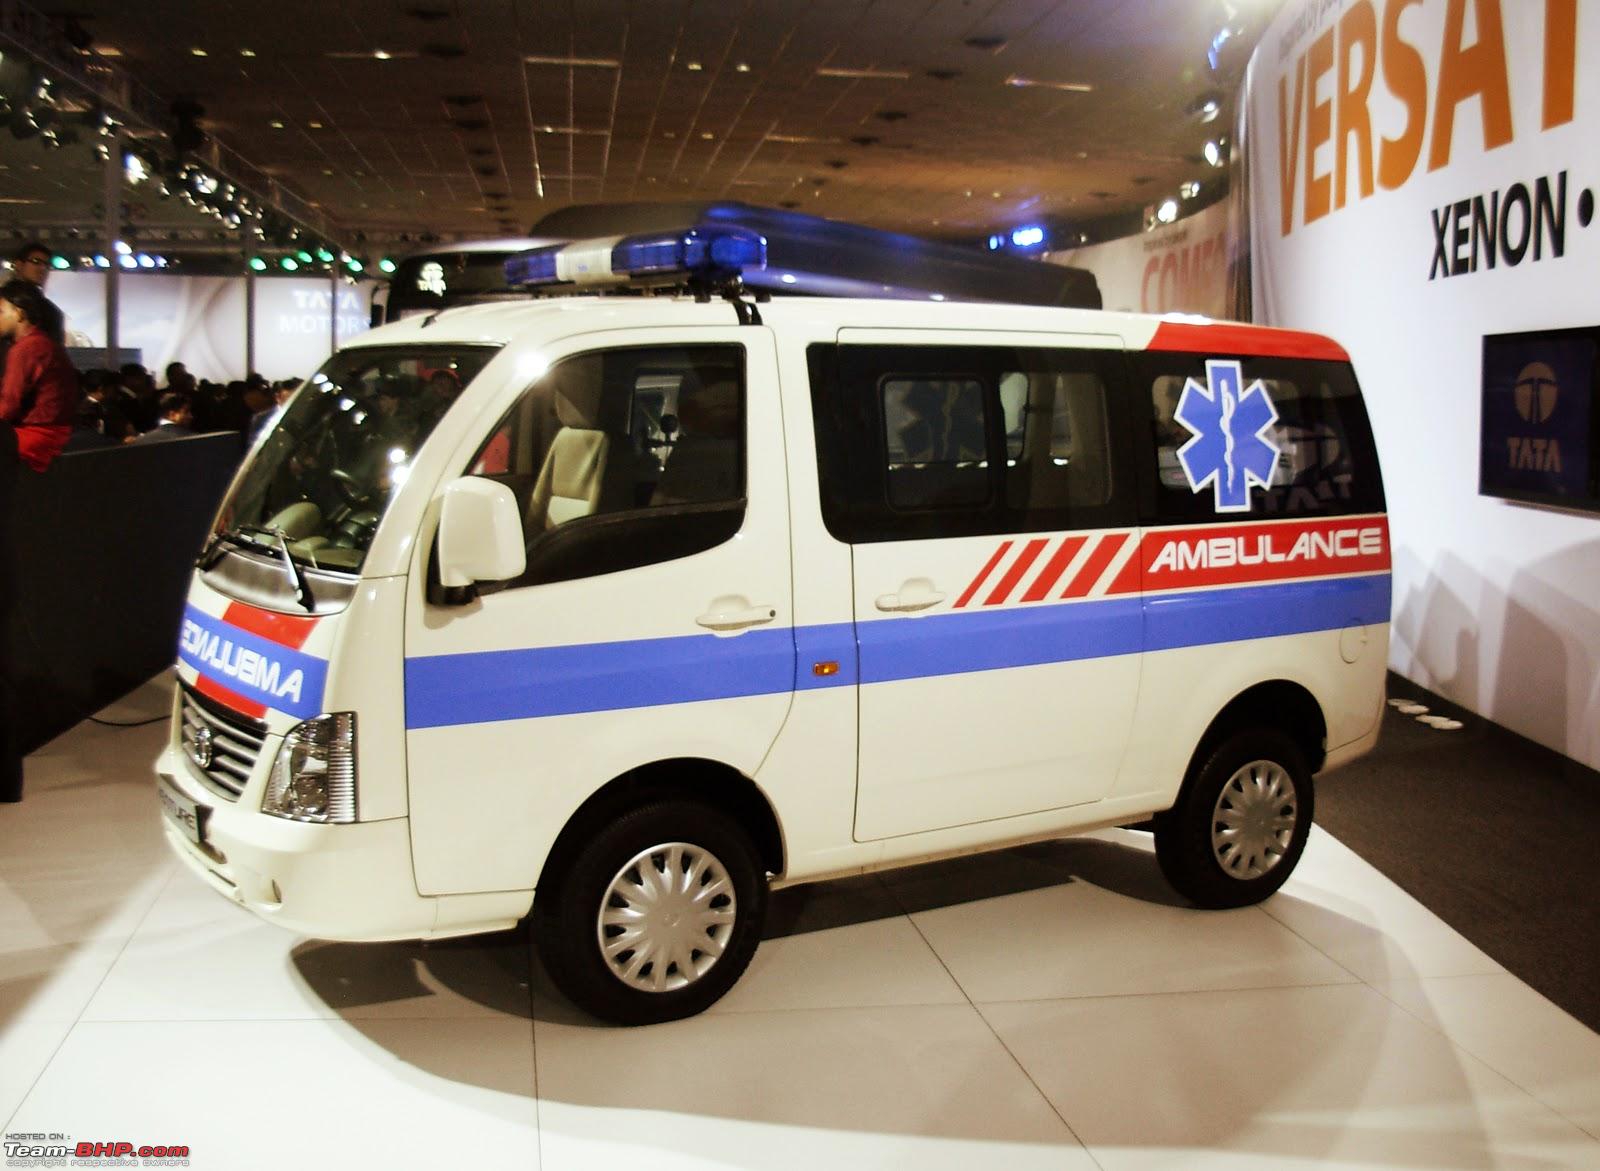 Ambulance Ambulance (The Baksara Co Operative) in Jagacha